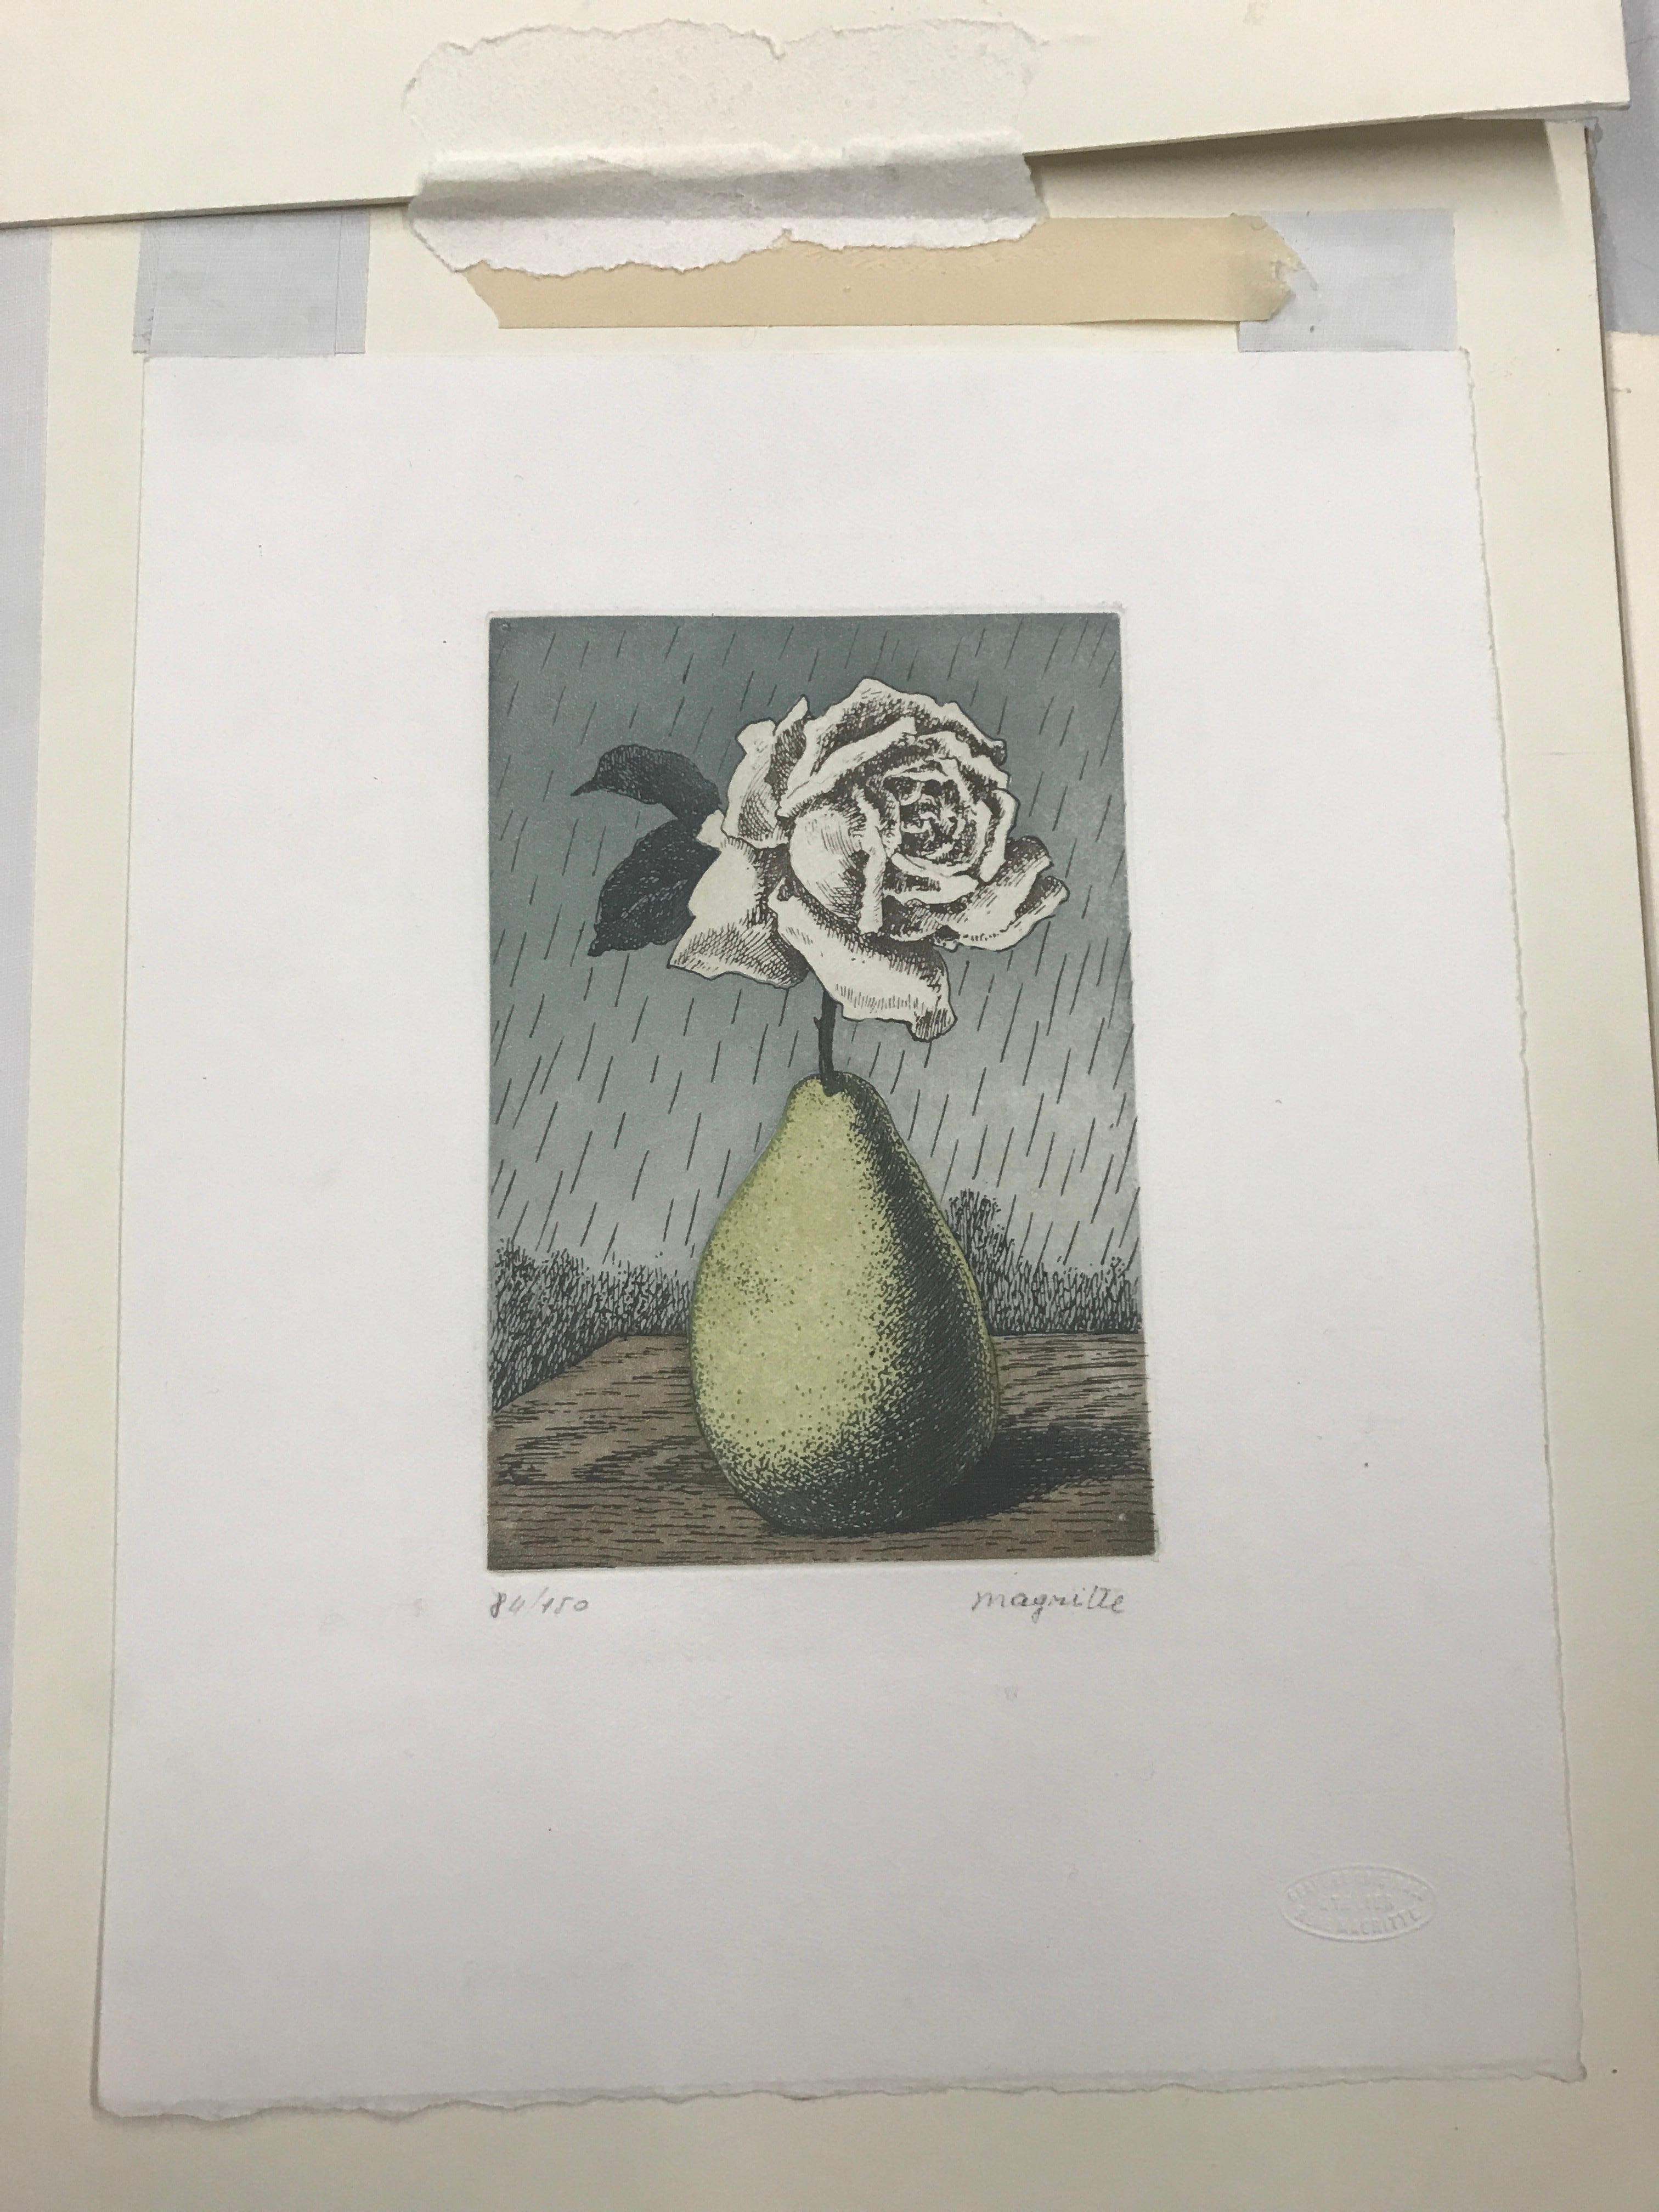 Les Moyens d'Existence - Print by René Magritte